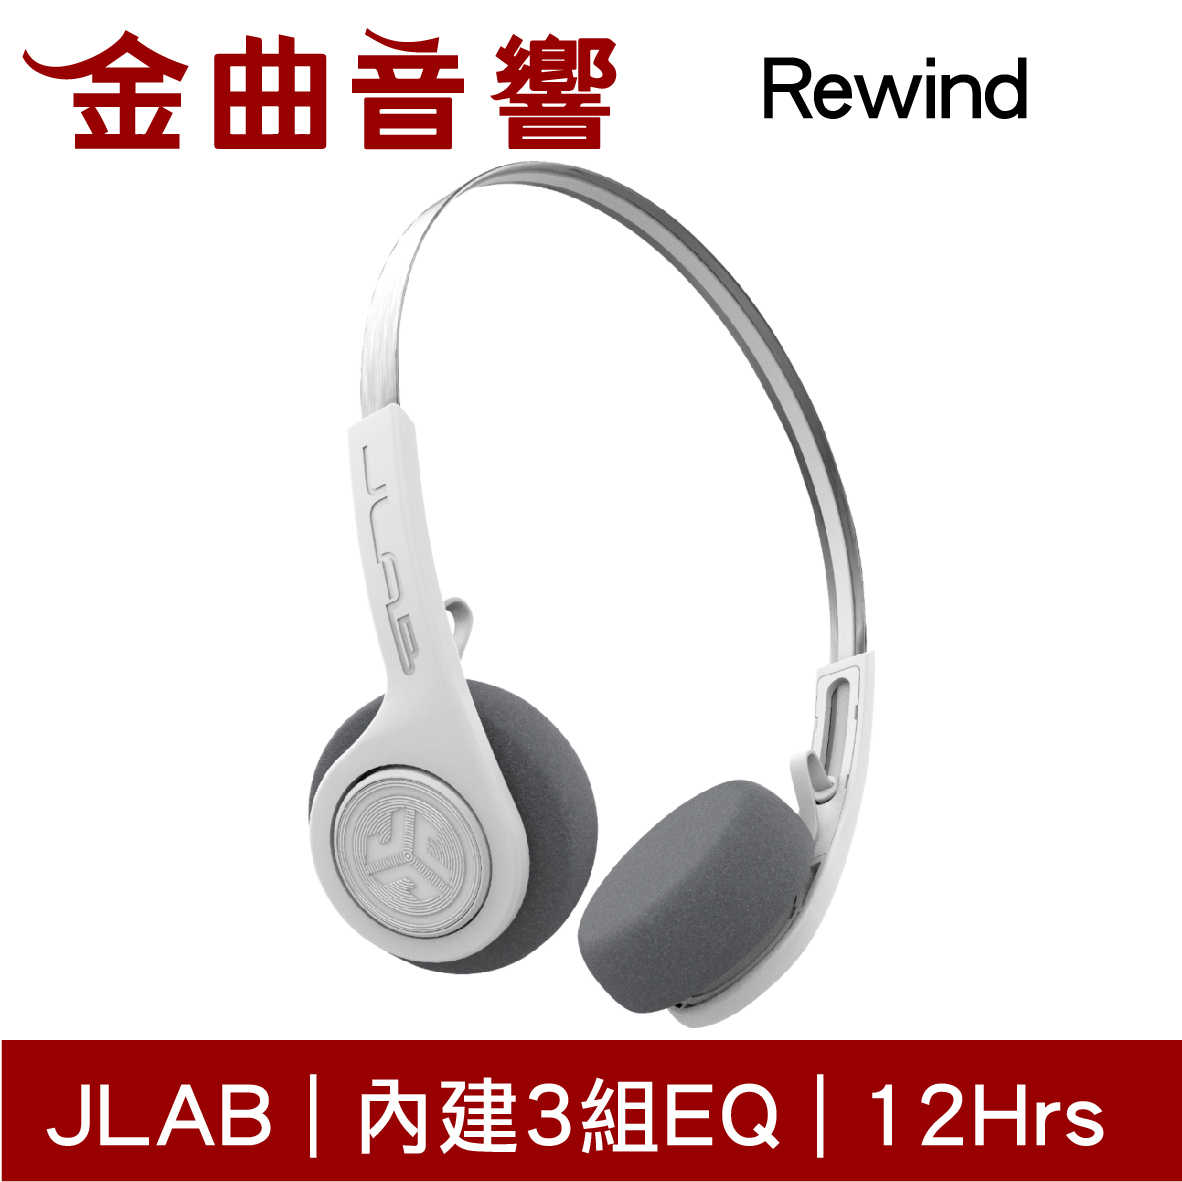 JLab Rewind 藍 藍牙耳機 可EQ調整 | 金曲音響